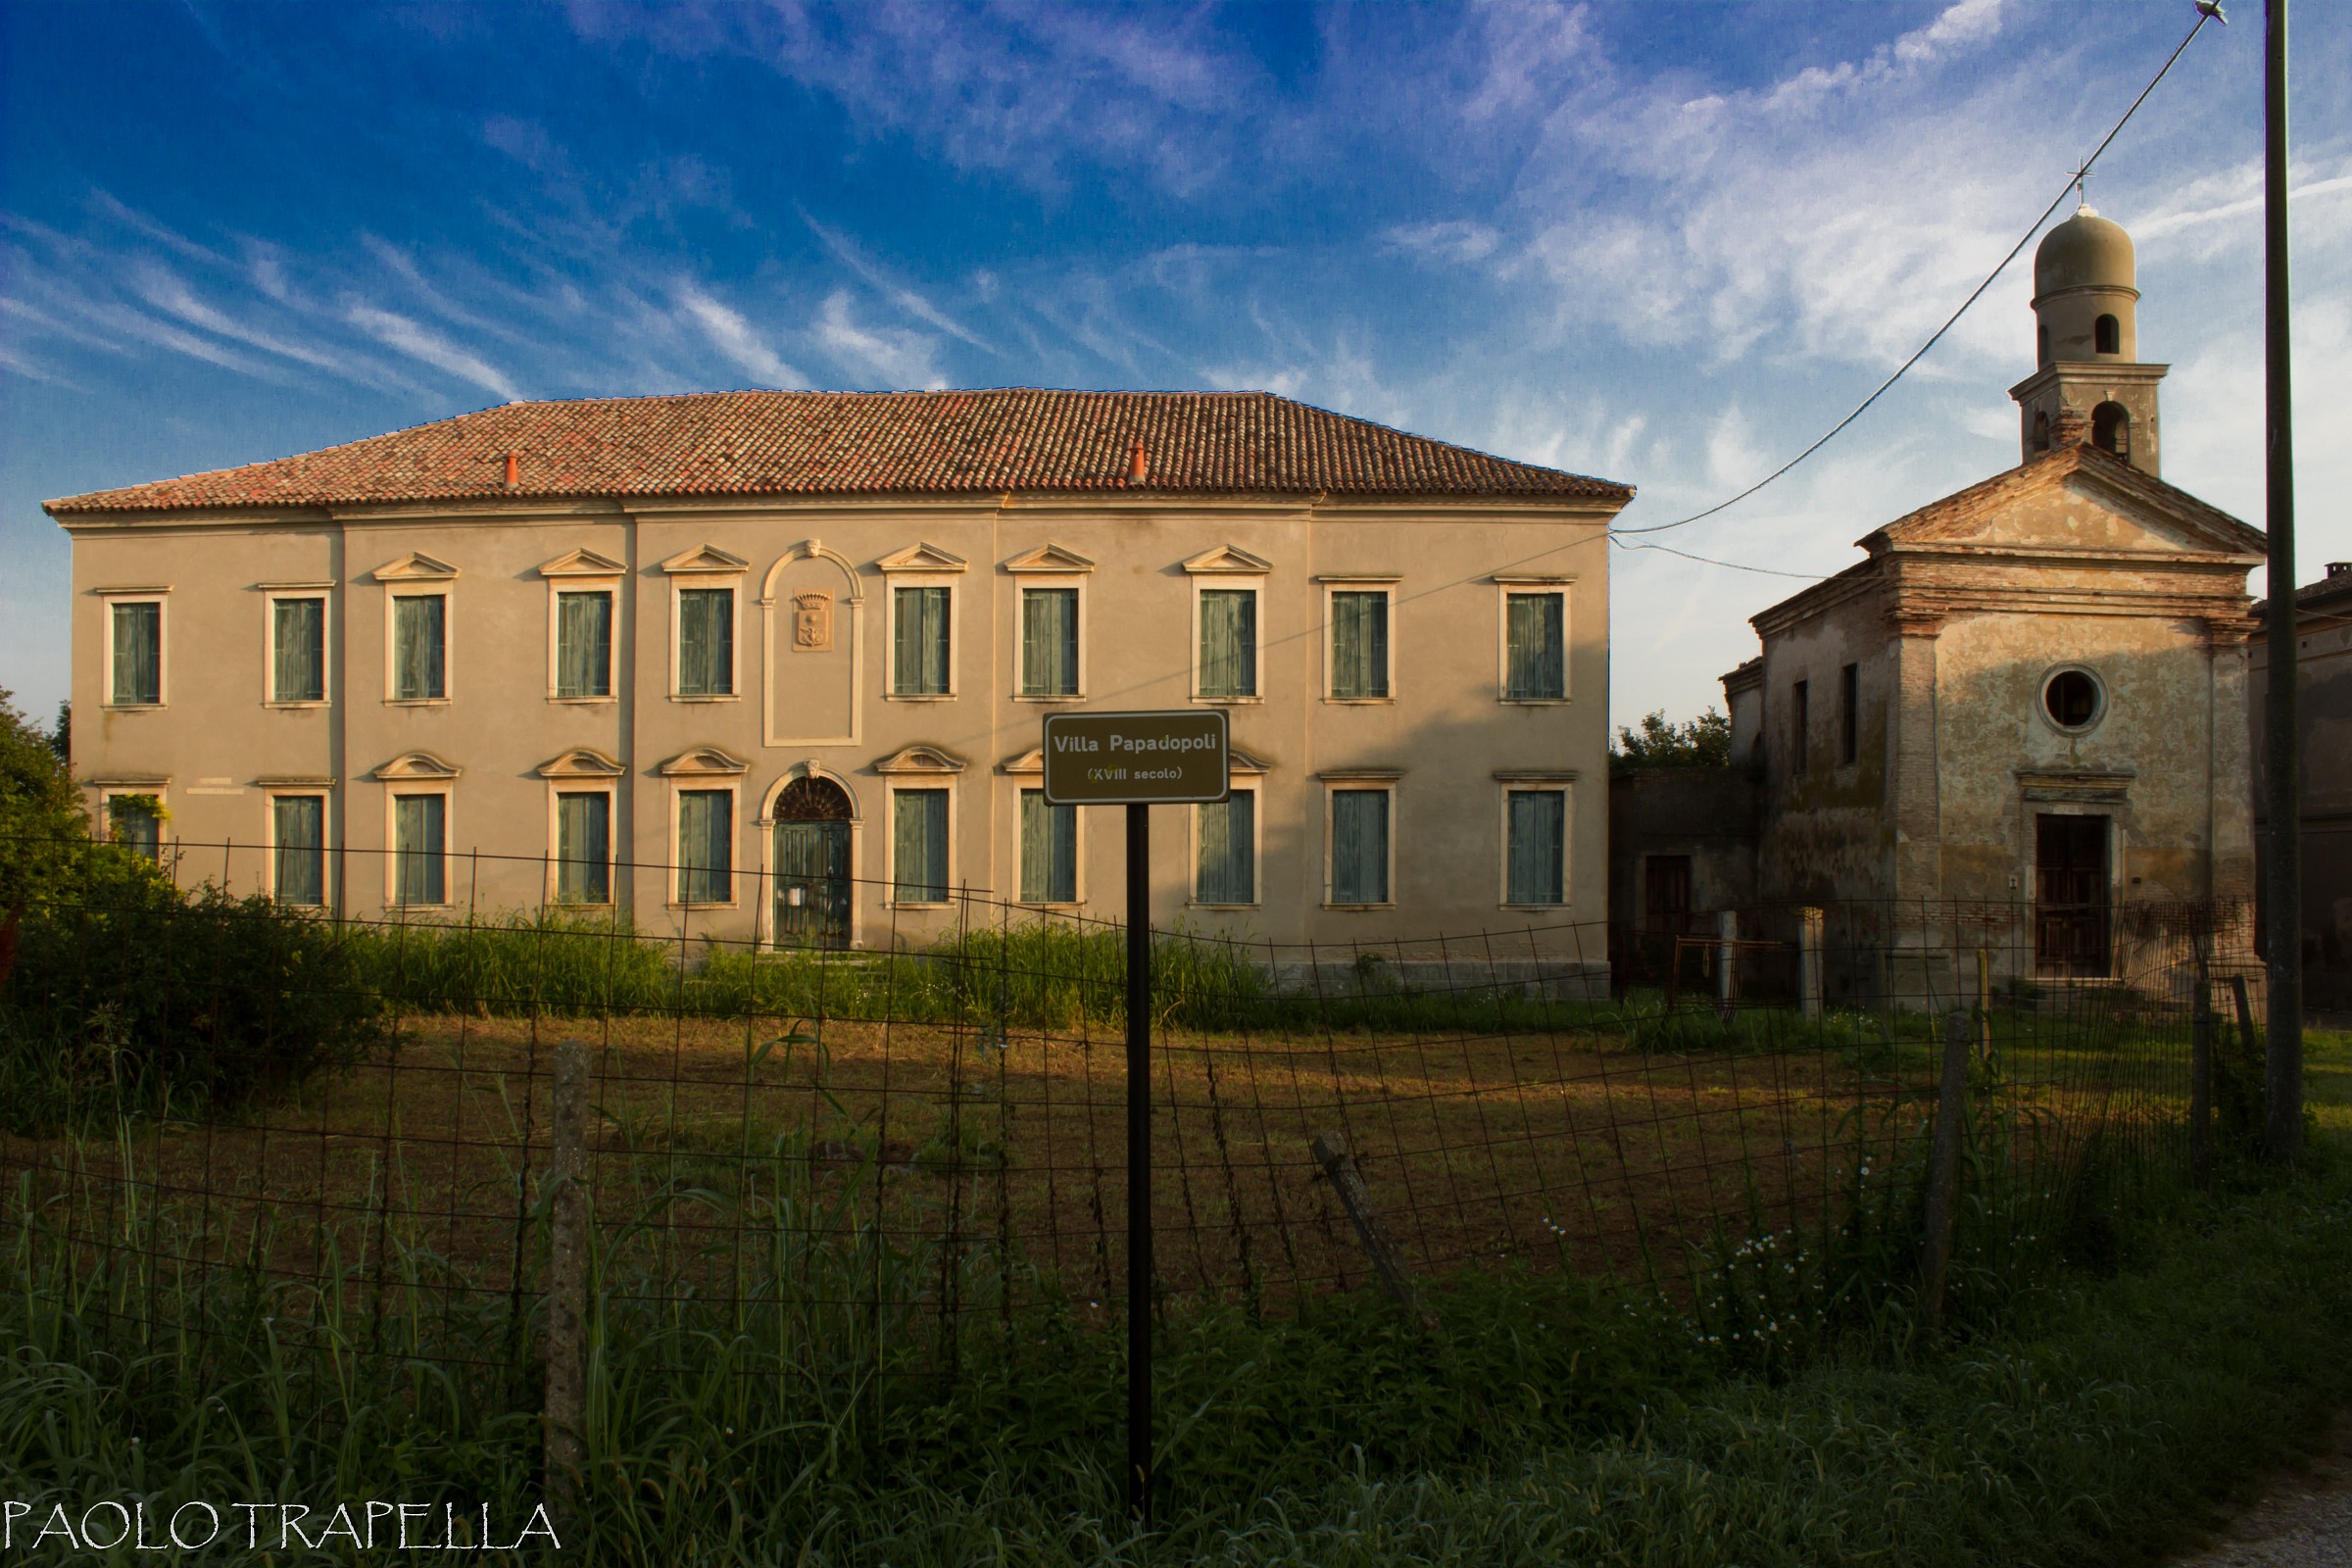 xviii century villa Papadopoli...